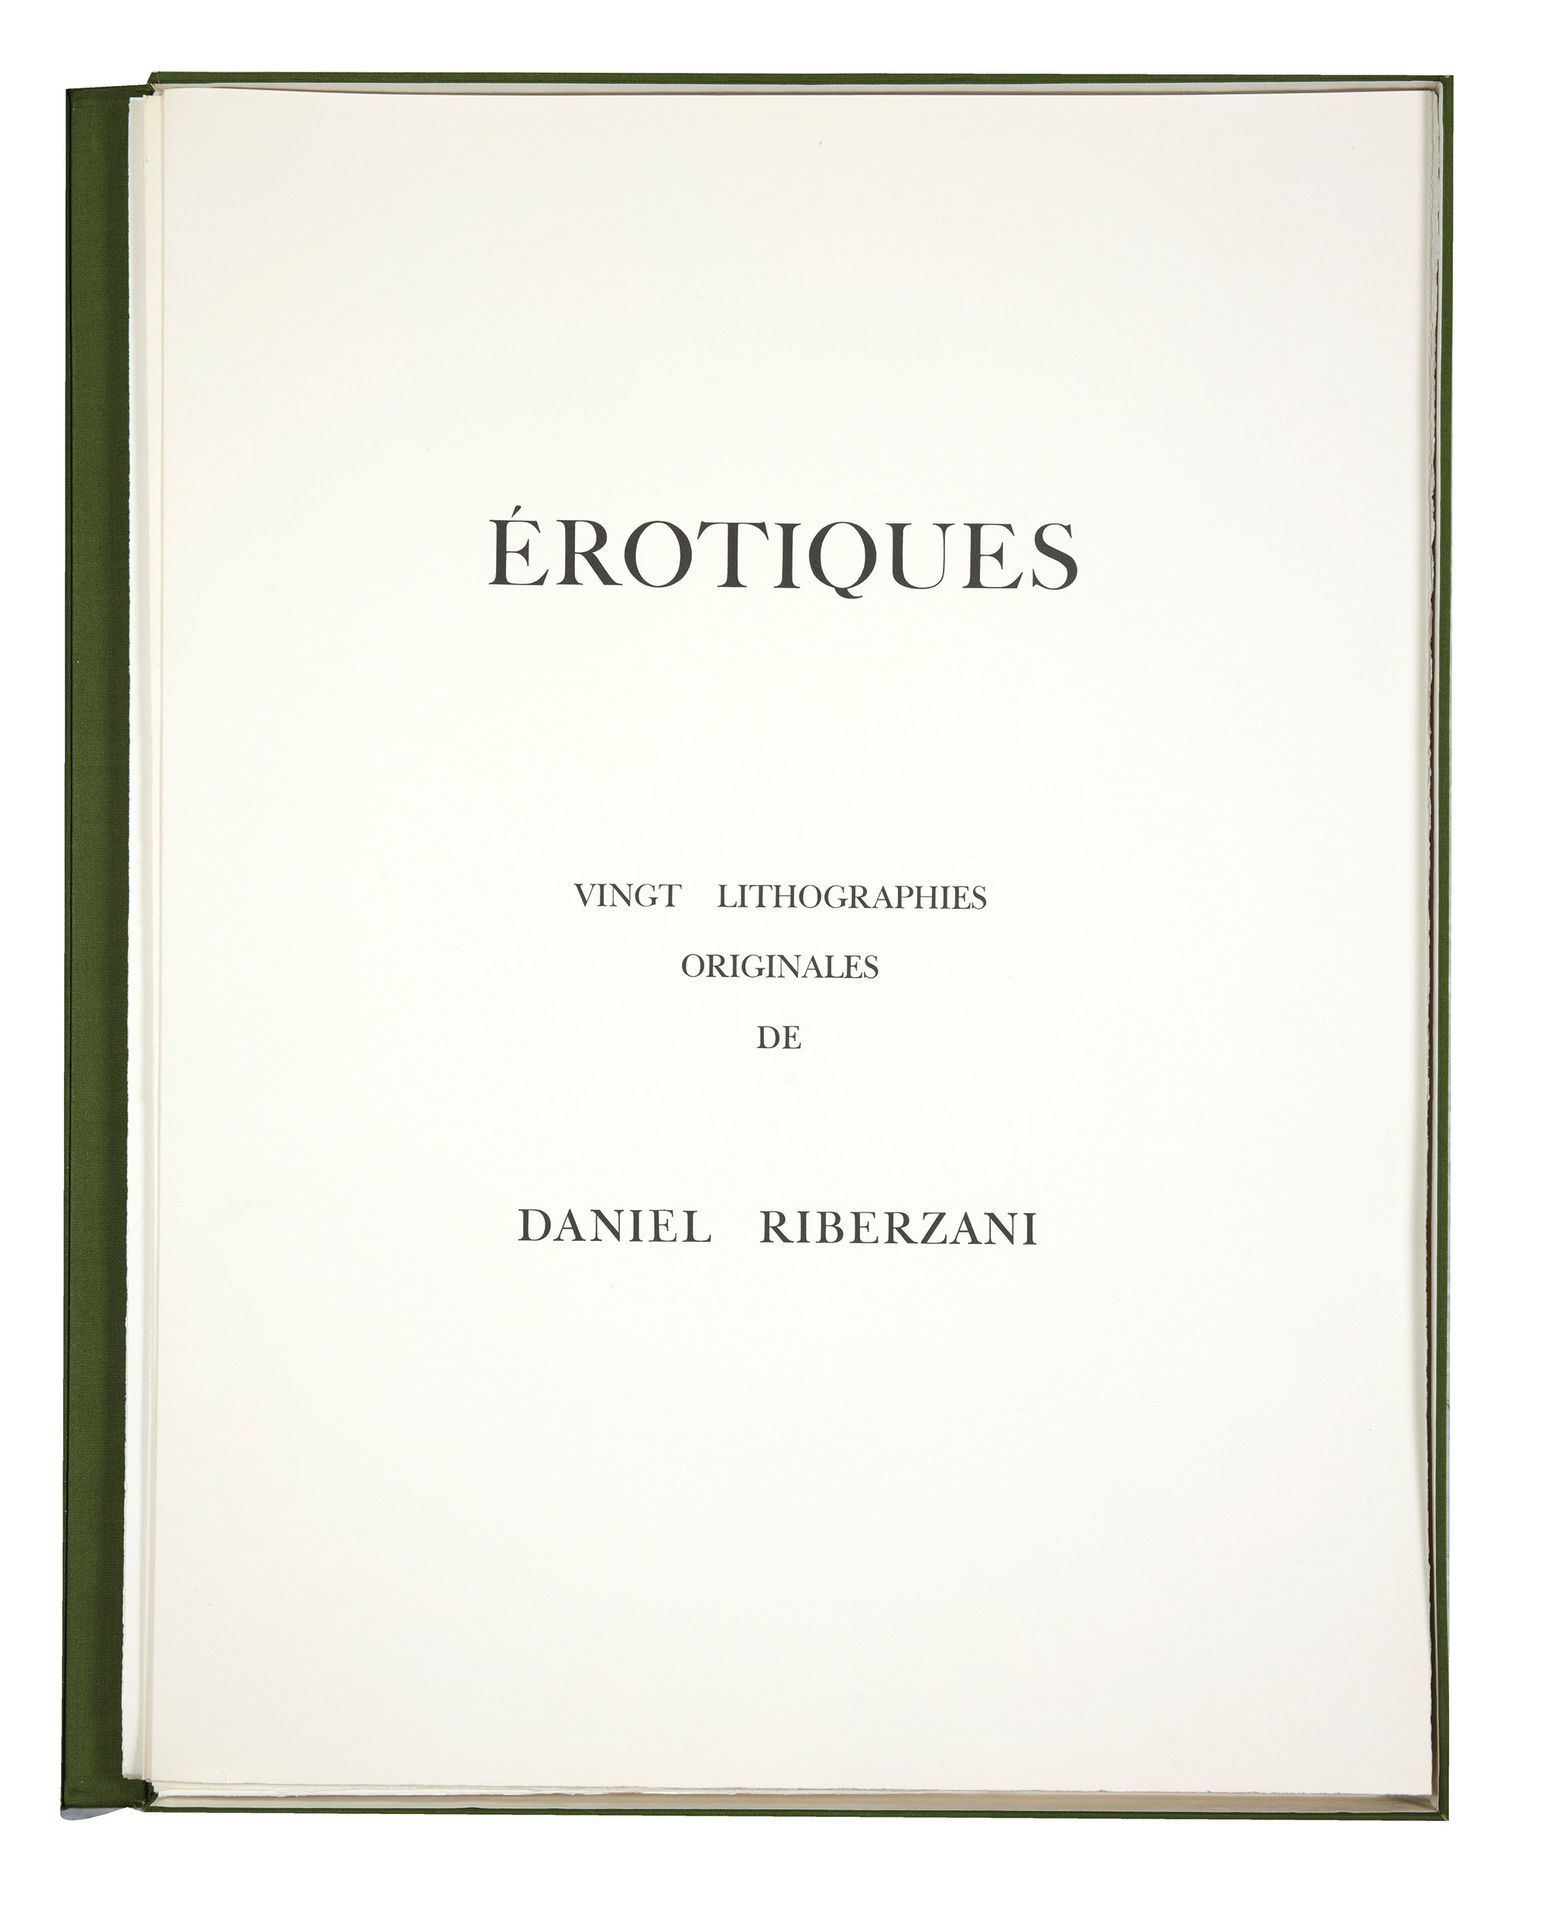 Daniel RIBERZANI Daniel RIBERZANI
Erotiques, twenty original lithographs, 1971, &hellip;